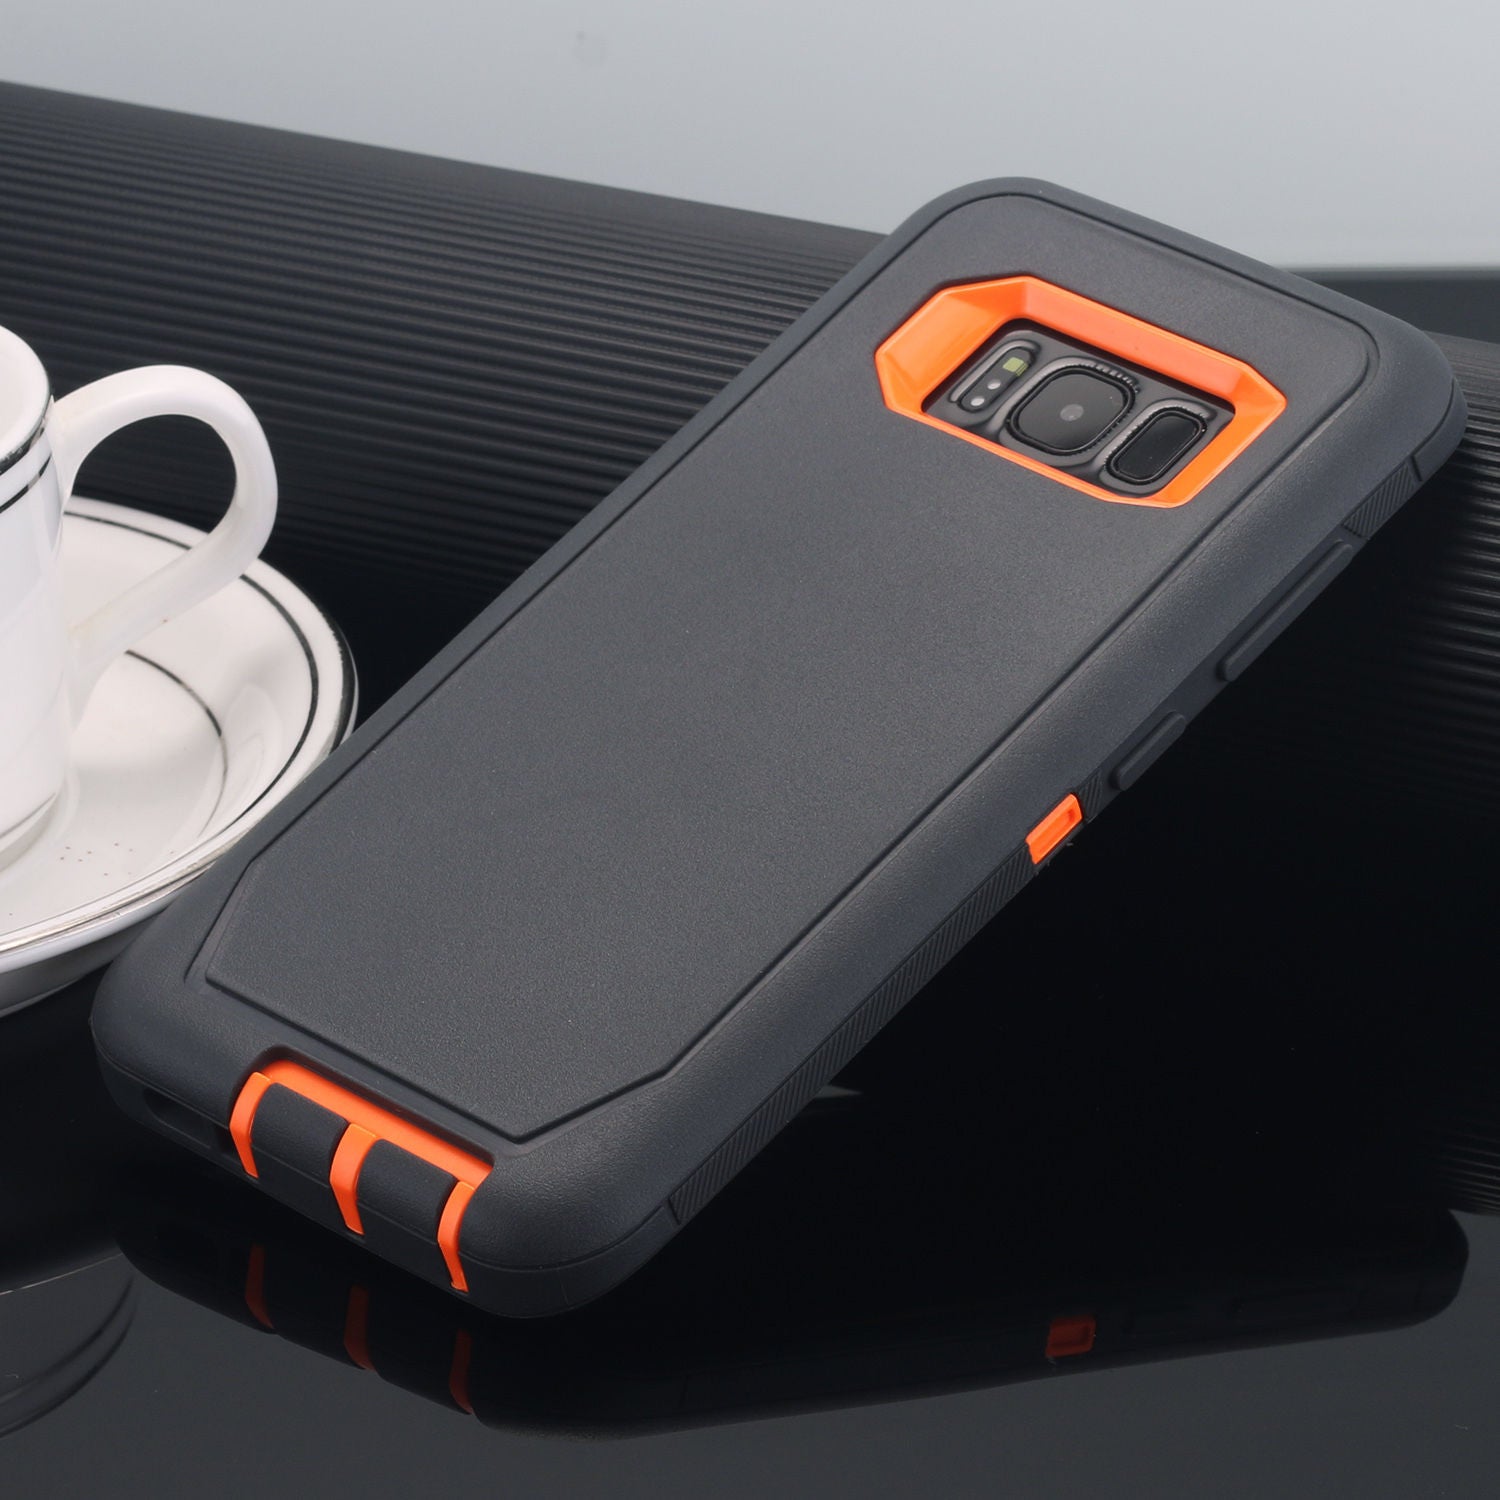 Samsung Galaxy S9Plus Case Shockproof Hybrid Rubber Armor Rugged Cover-Dark Gray/Orange